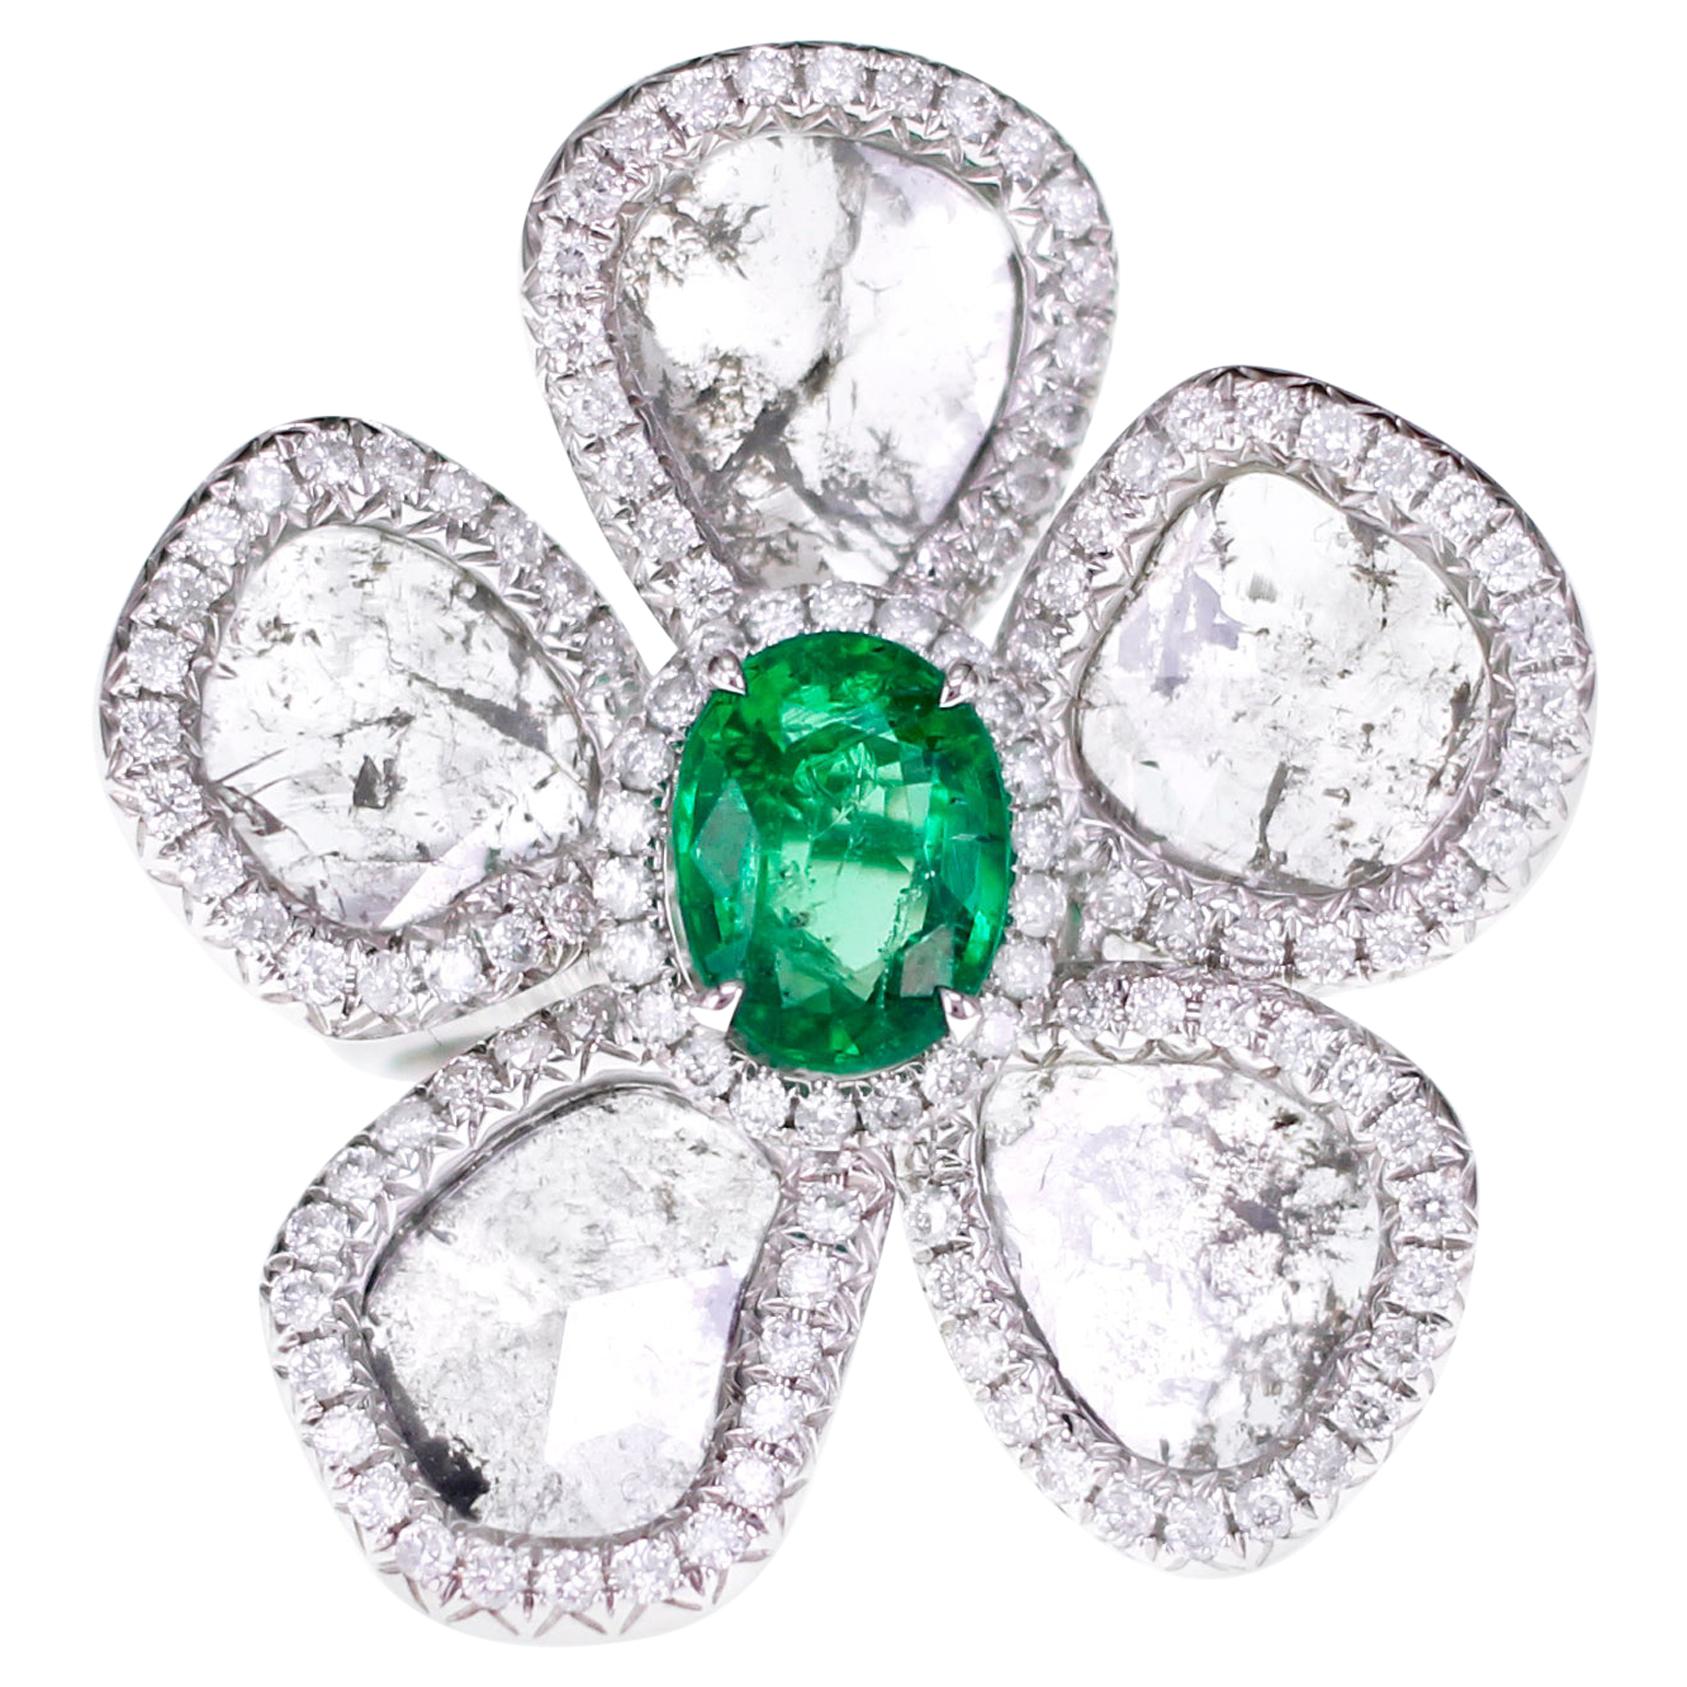 Vivid Green Zambian Emerald with Salt and Pepper Slice Diamond